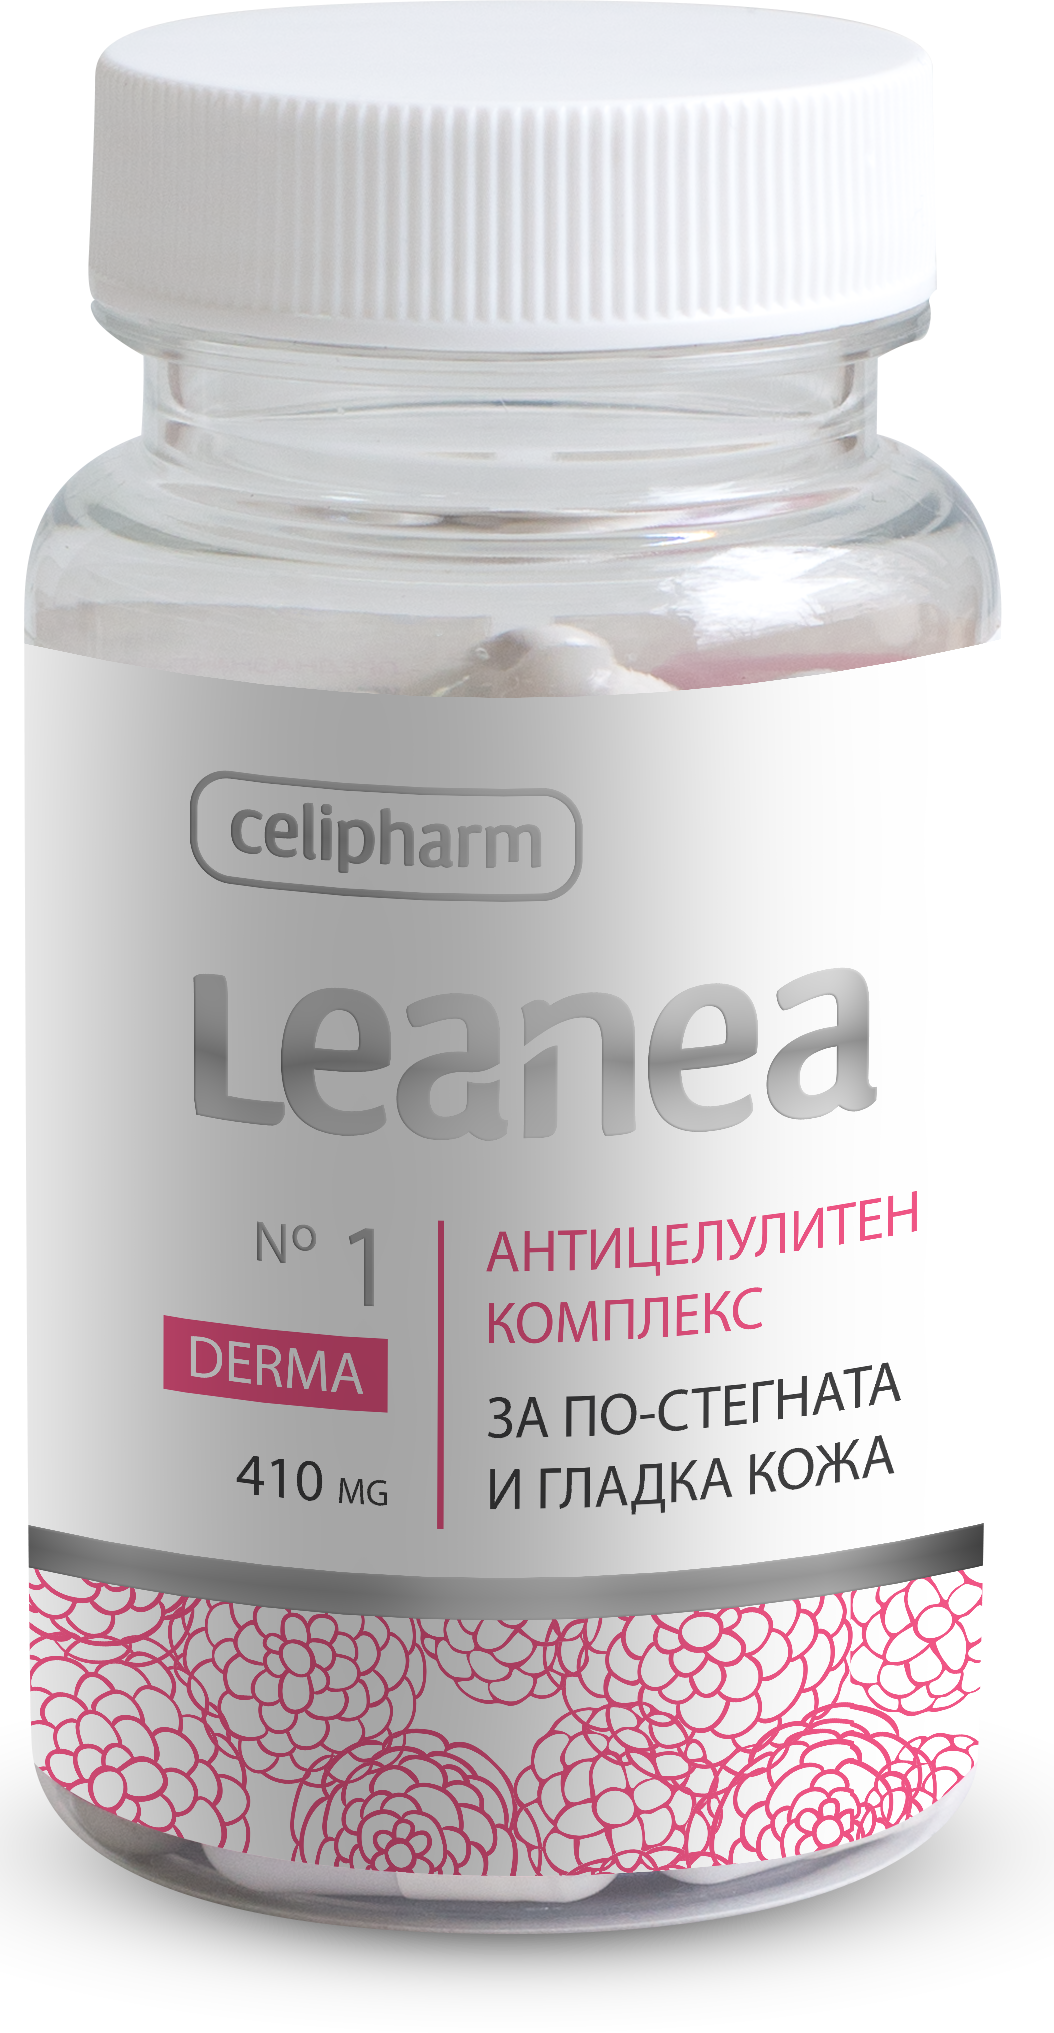 Leanea / Derma - BadiZdrav.BG